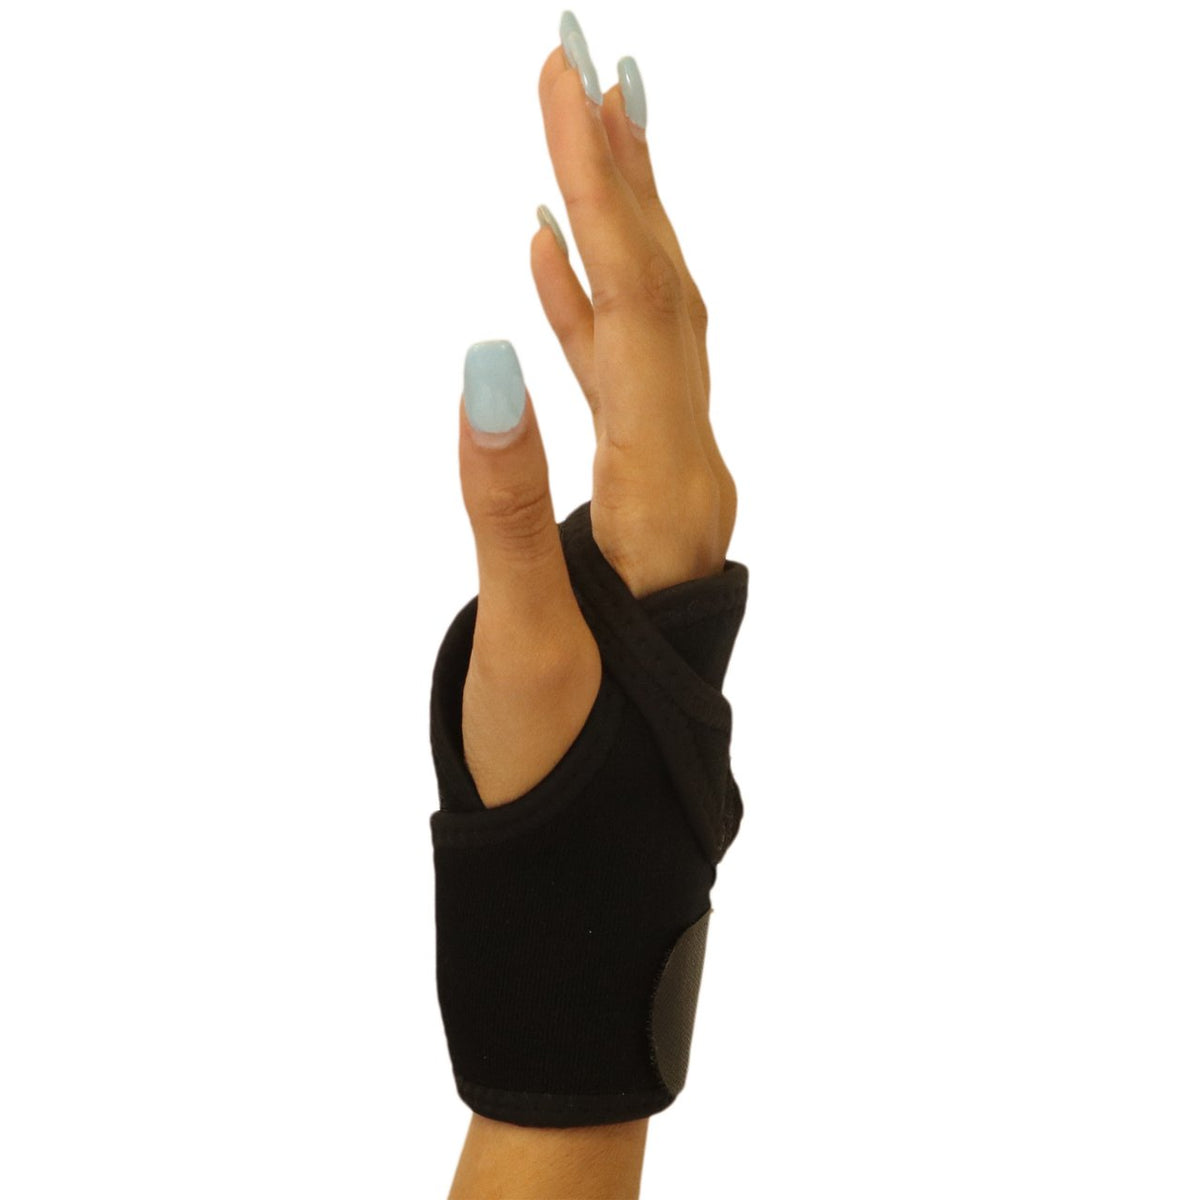 Gel Carpal Tunnel Wrist Brace Wrist Brace - with Innovative Super Comfort Gel Wrist Support - Universal Size - Left - Mars Med Supply